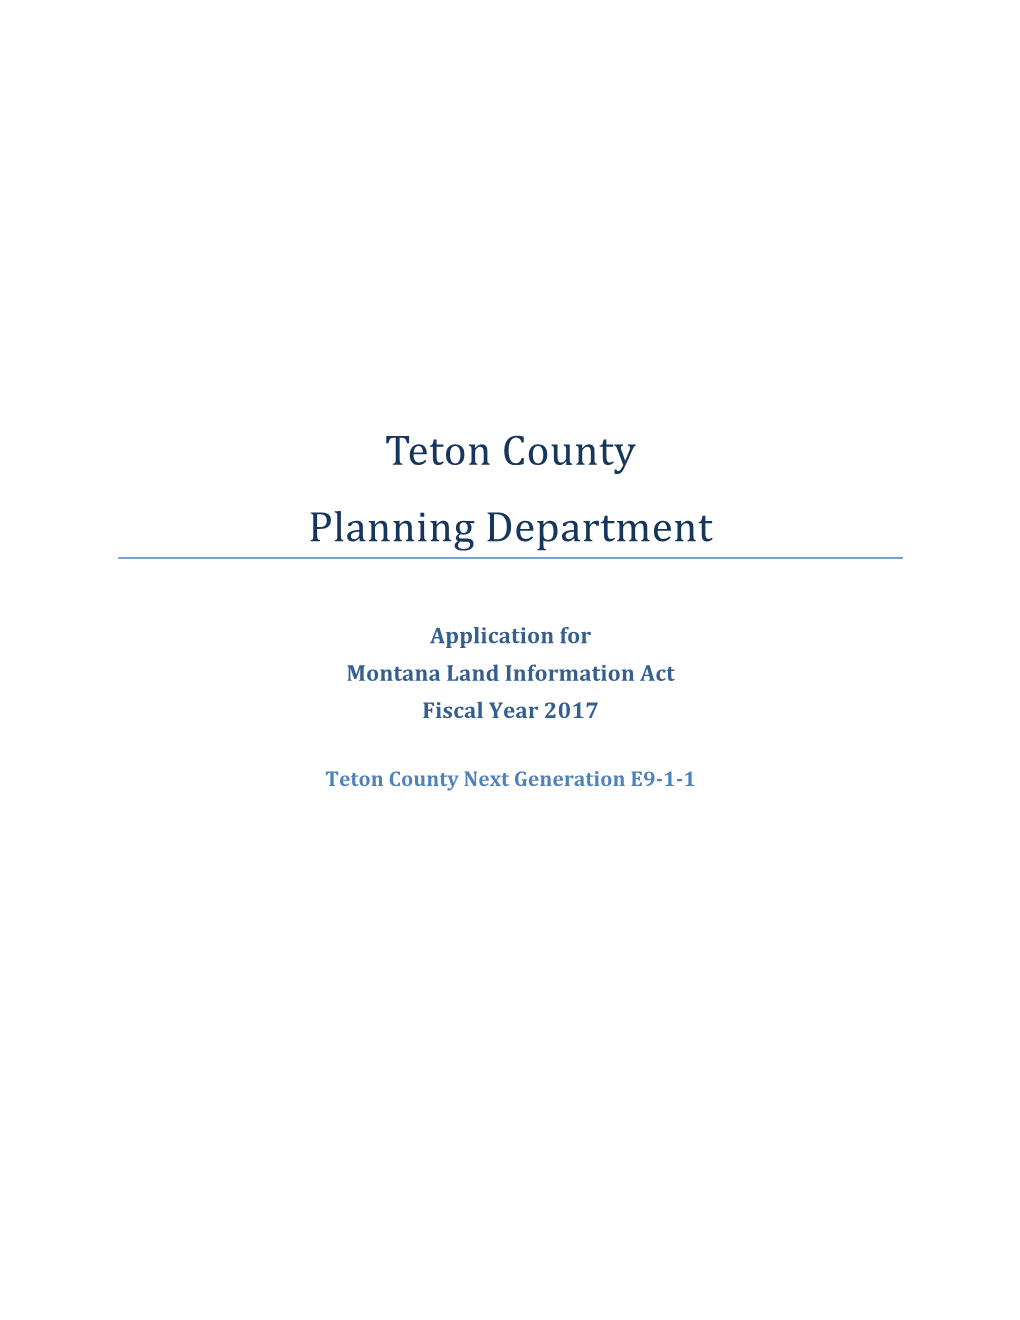 Teton County Planning Department